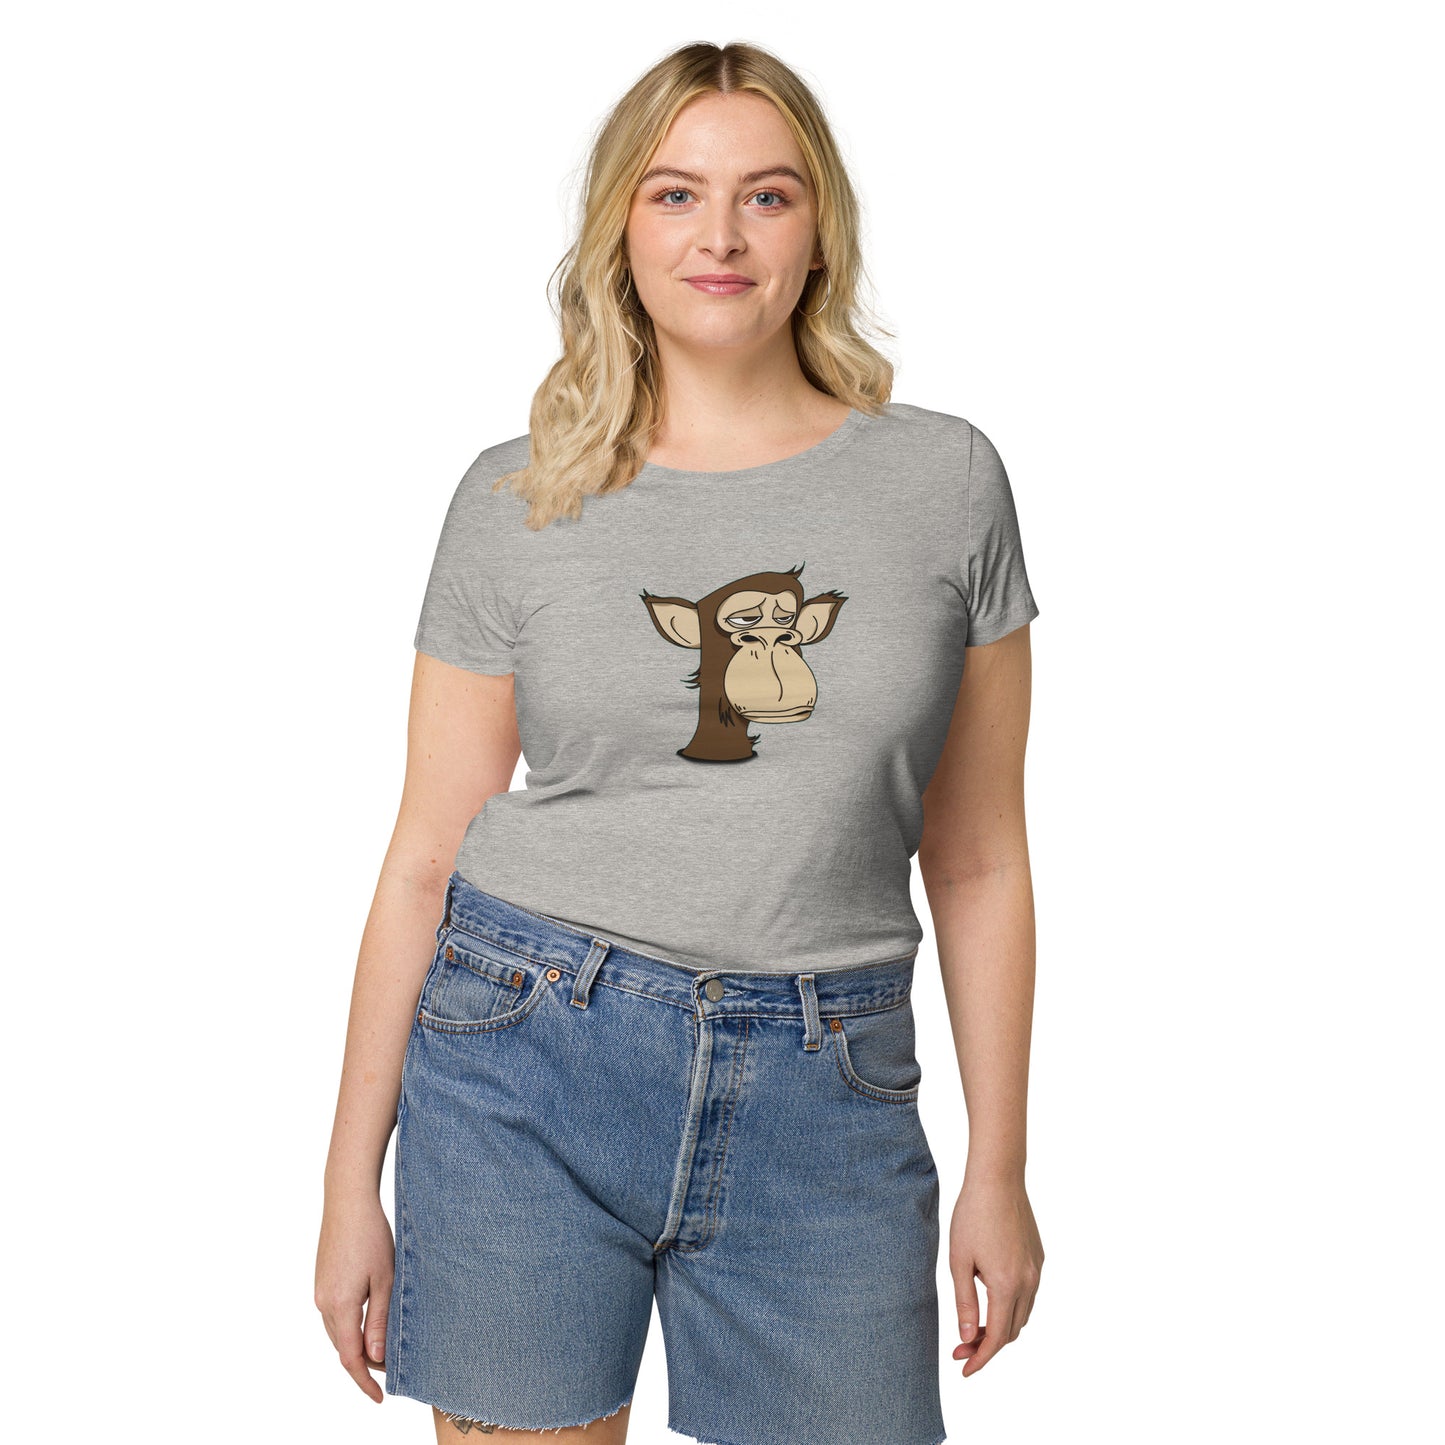 Women’s basic organic t-shirt feat Polygon Ape YC #6437